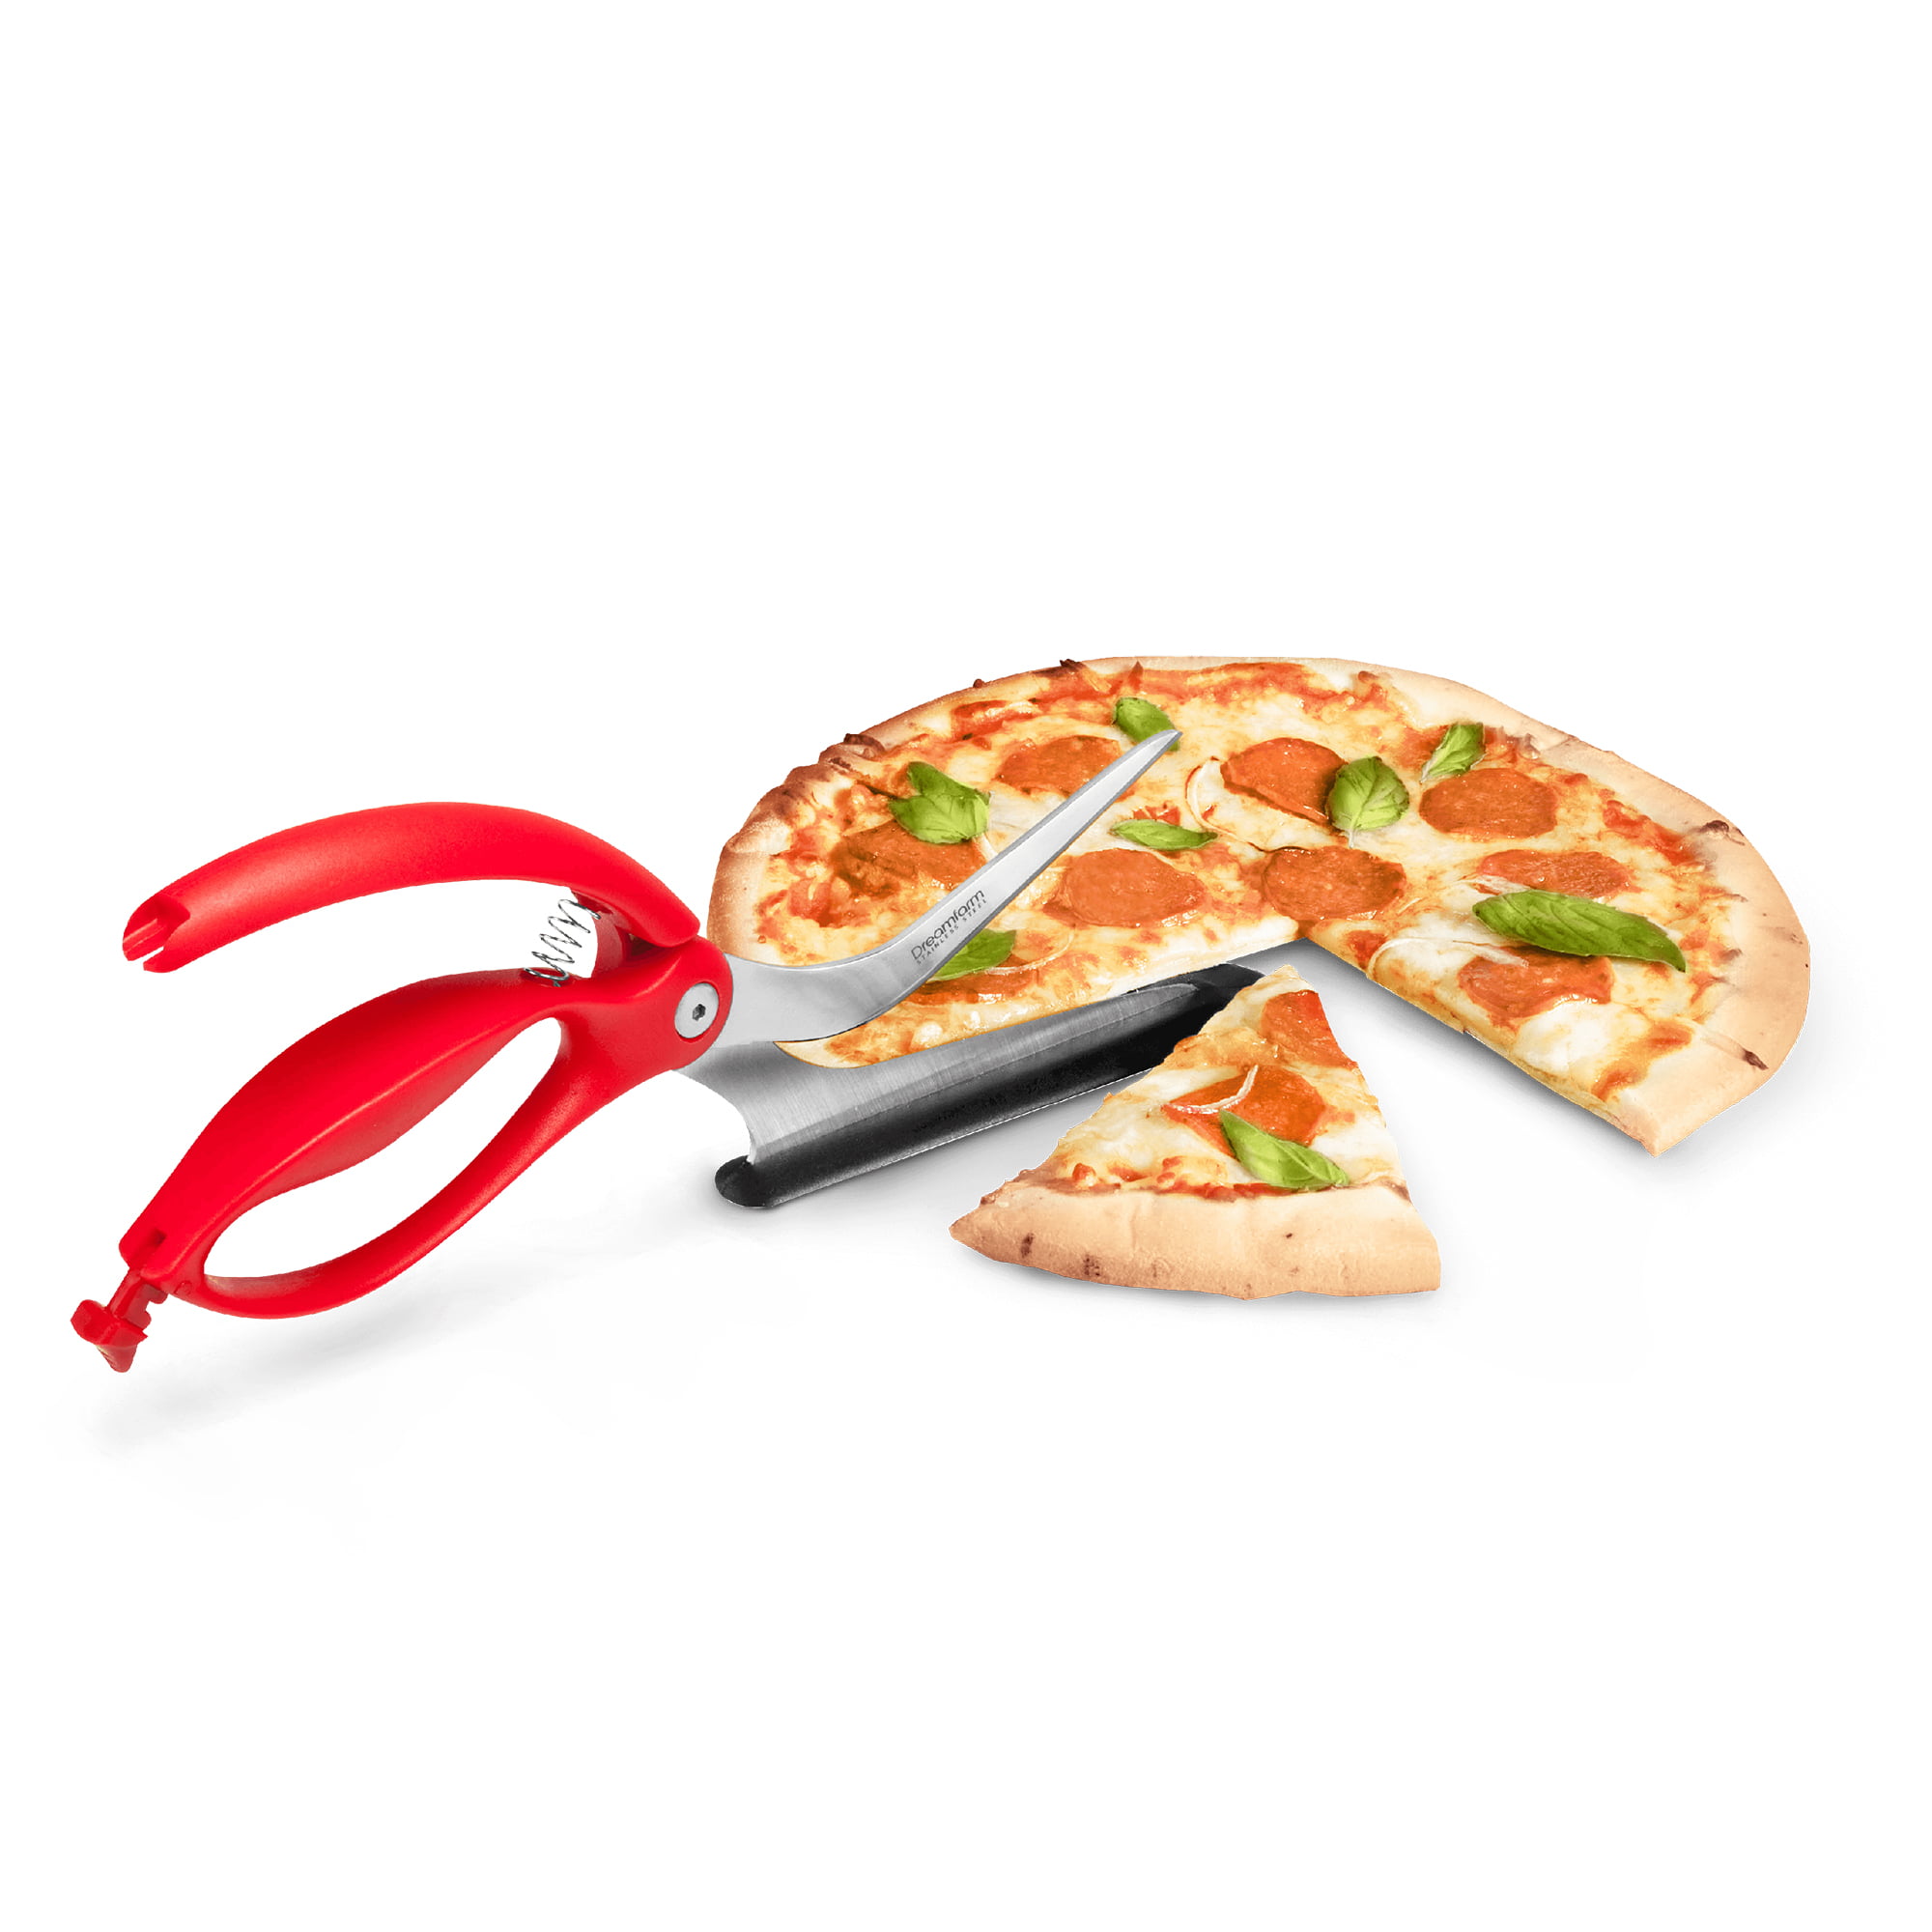 Dreamfarm Scizza Pizza Scissors - Charcoal - KnifeCenter - DFSC2010 -  Discontinued